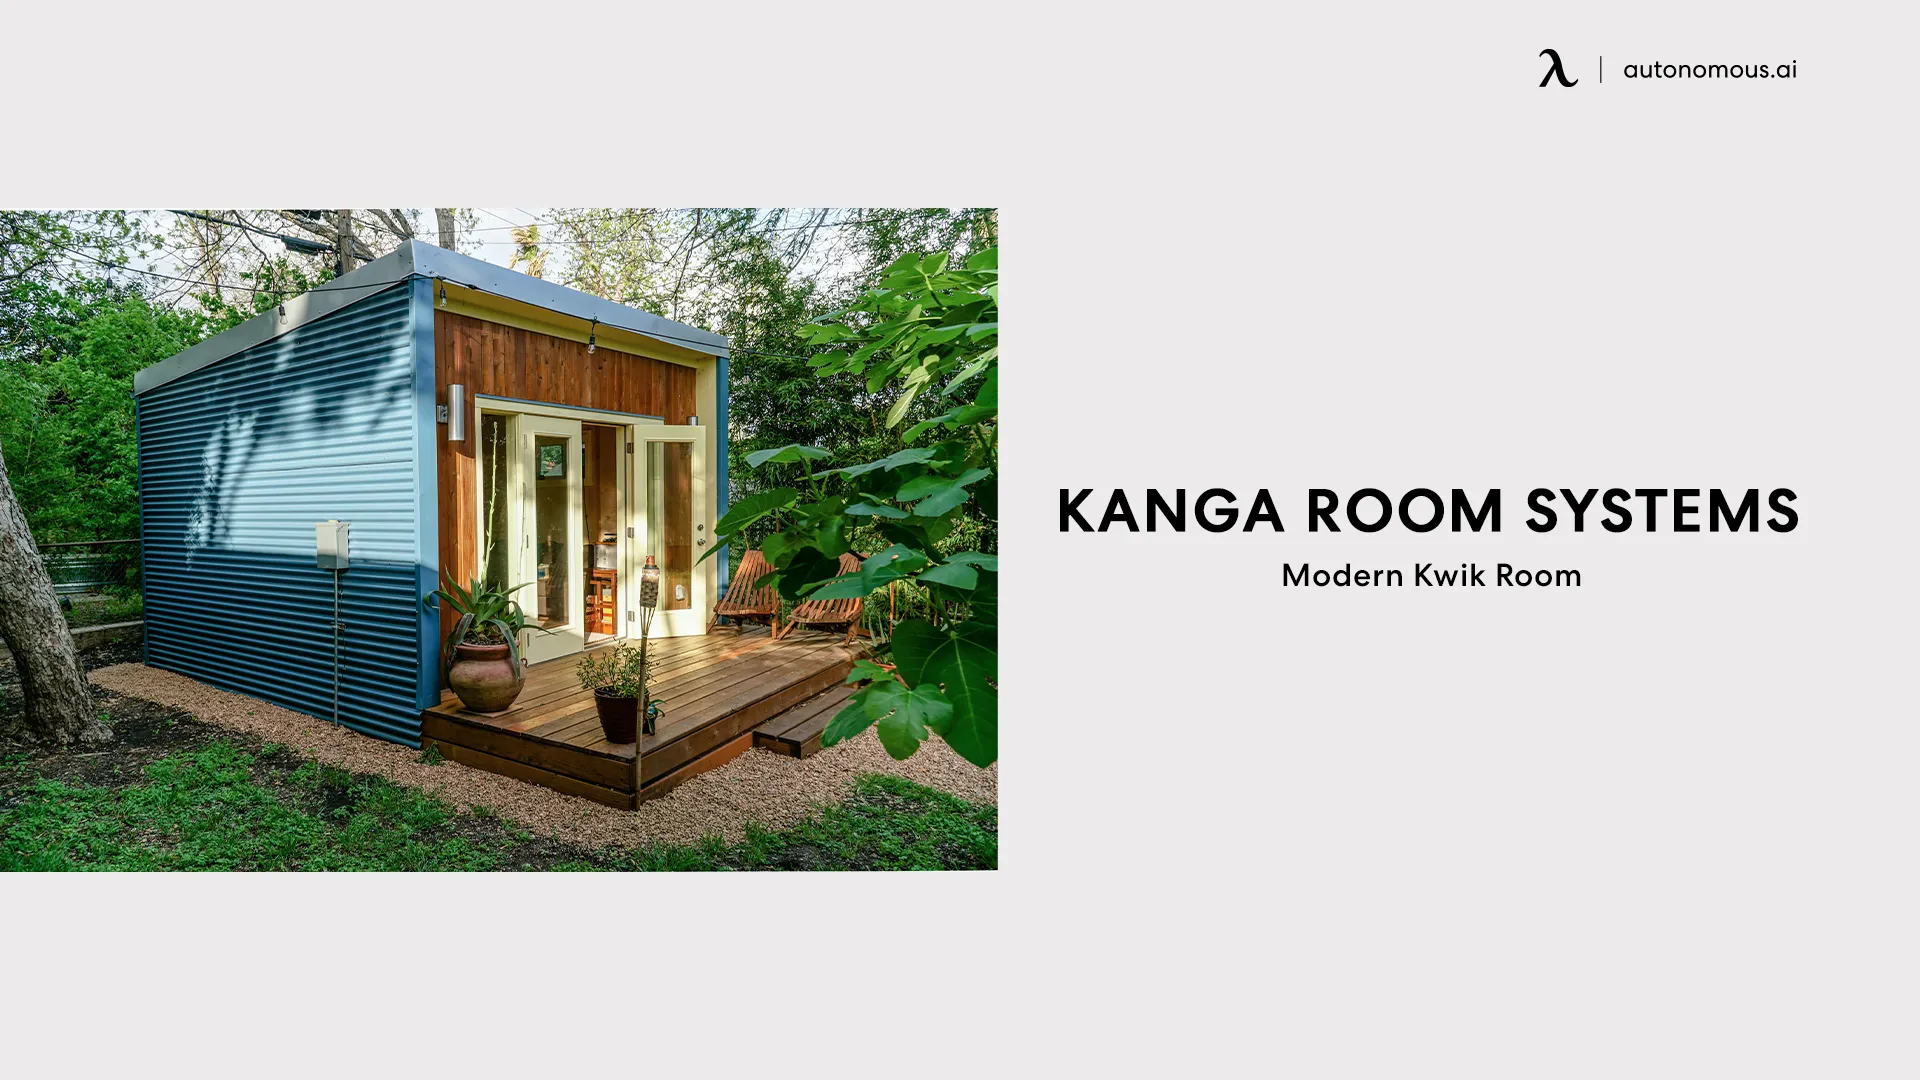 Kanga Room Systems - prefab home under 50K